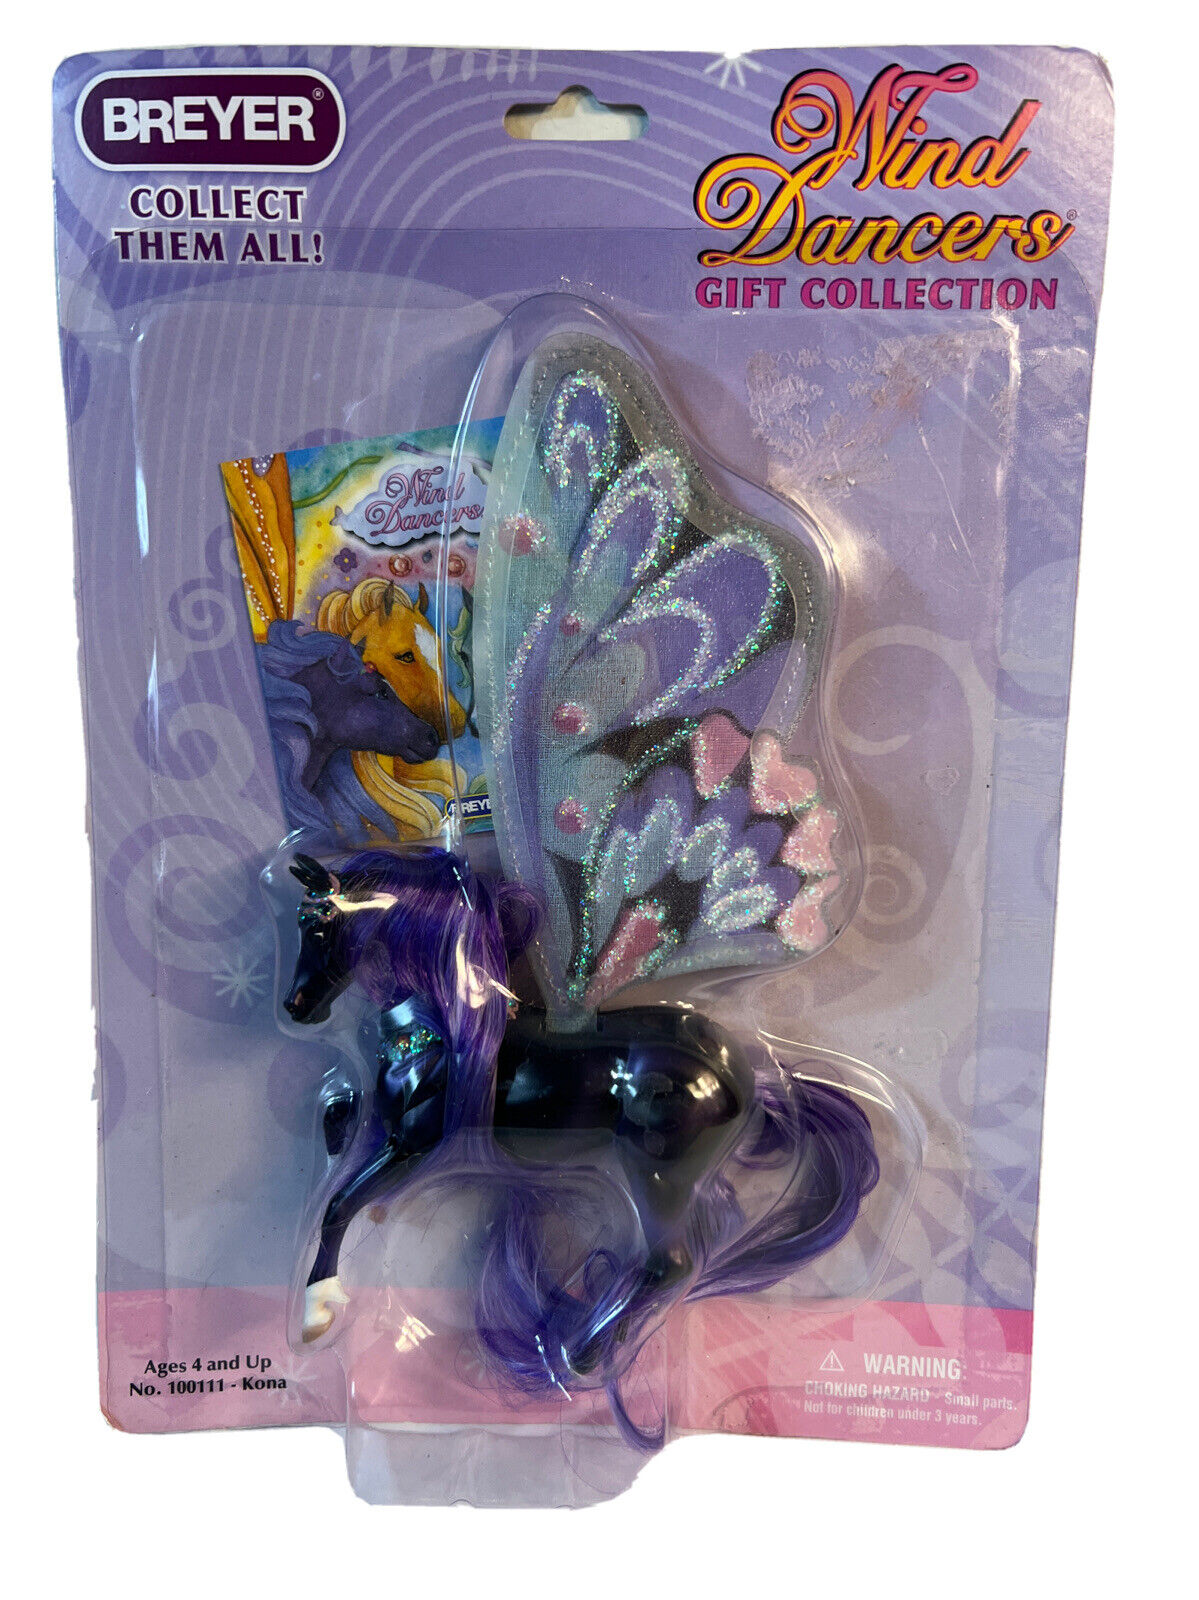 Breyer Wind Dancers Gift Collection Winged Horse KONA Retired #100111